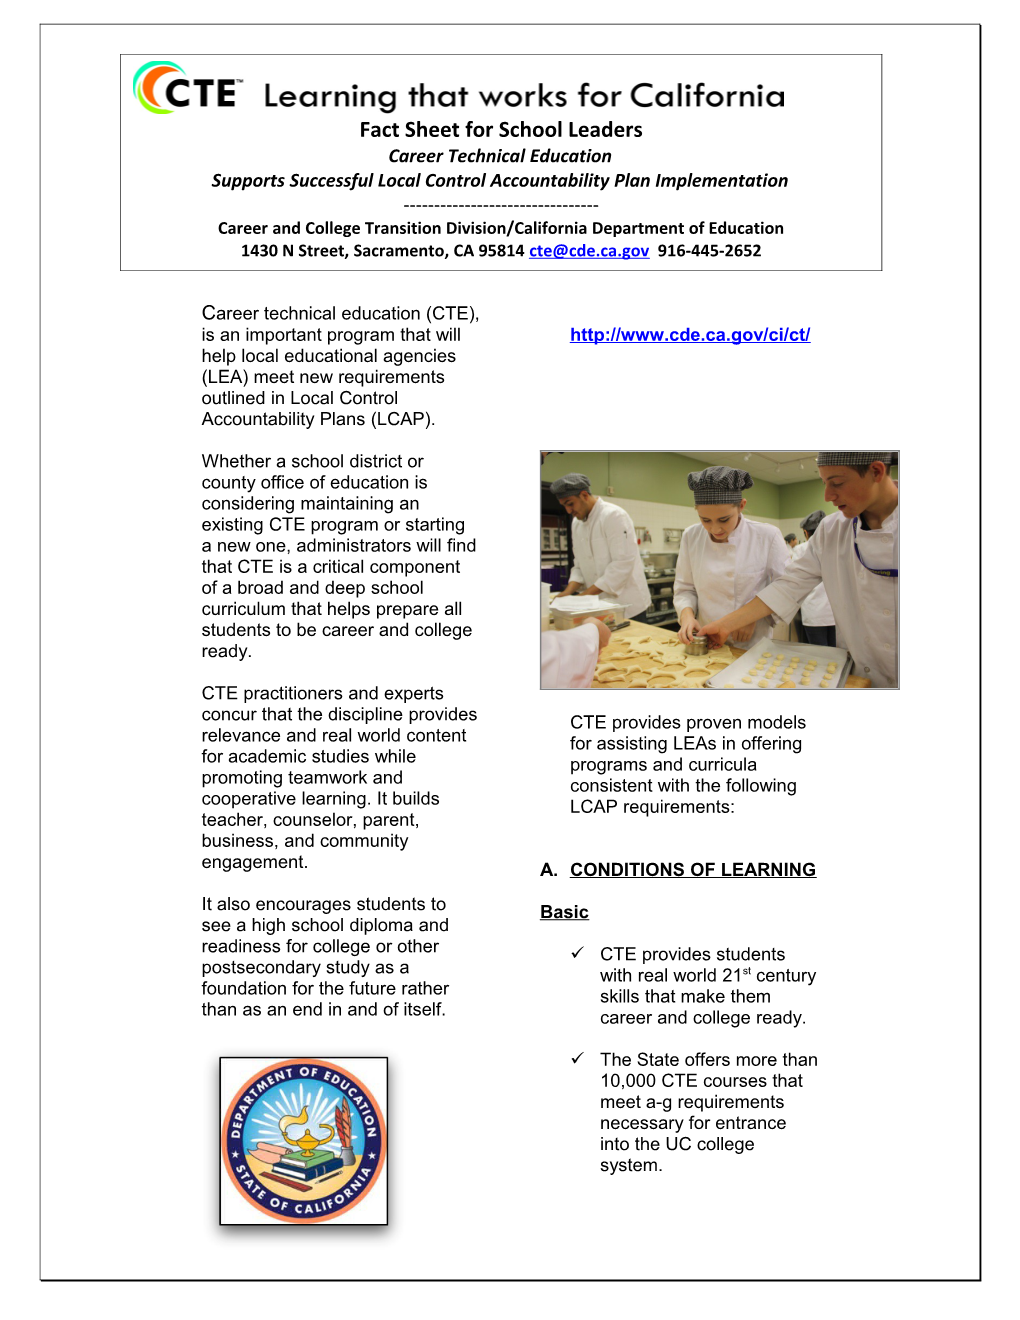 CTE Fact Sheet for School Leaders - Perkins (CA Dept of Education) s1